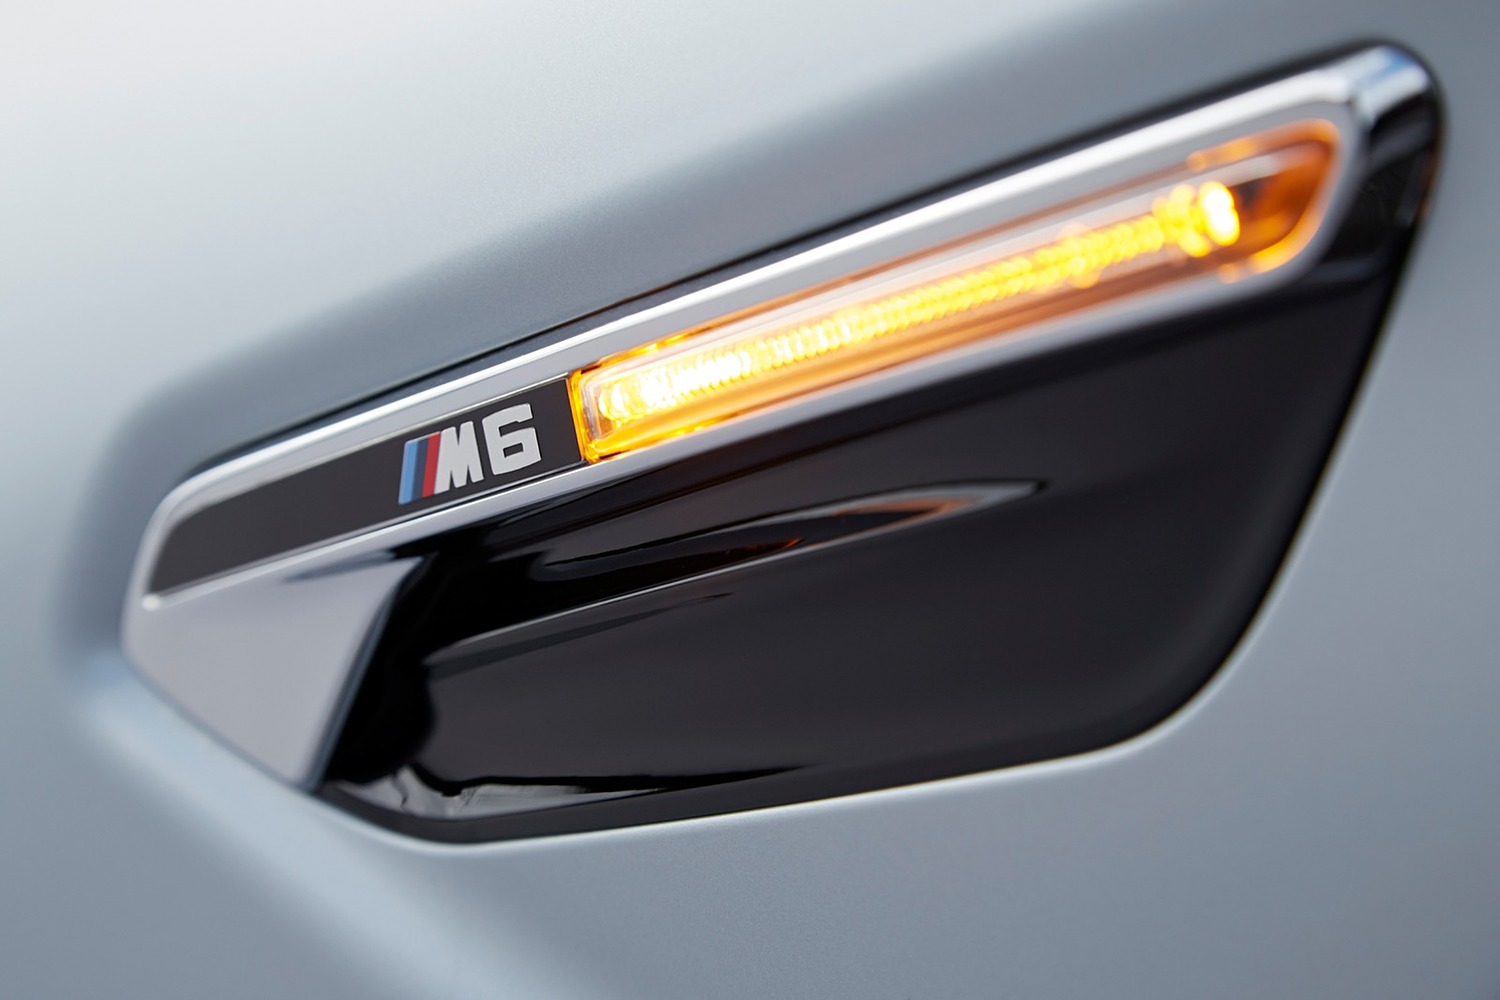 BMW M6 Gran Coupe Sedan Exterior Detail (2017 model year shown)